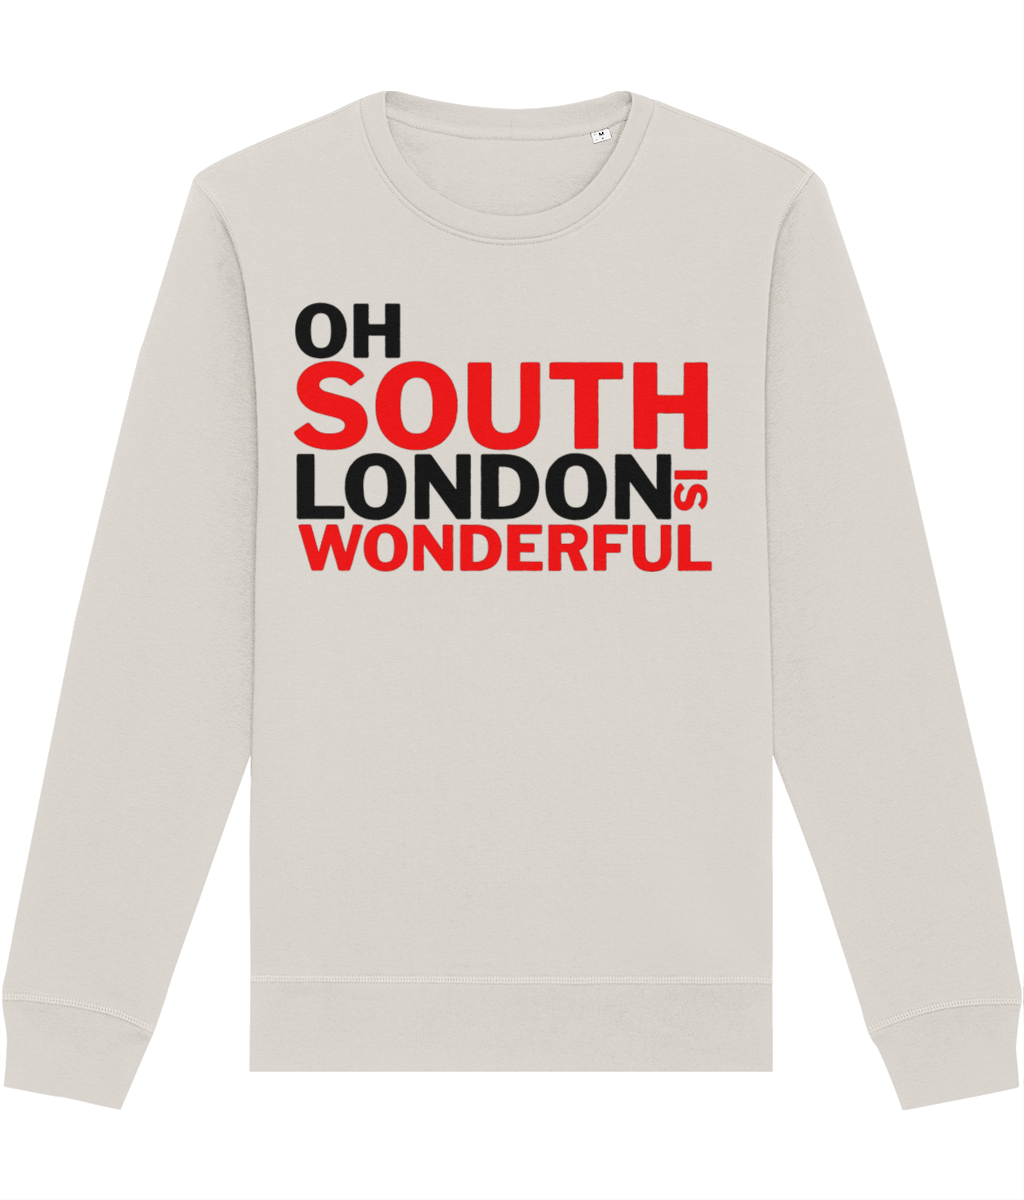 Oh South London Sweatshirt